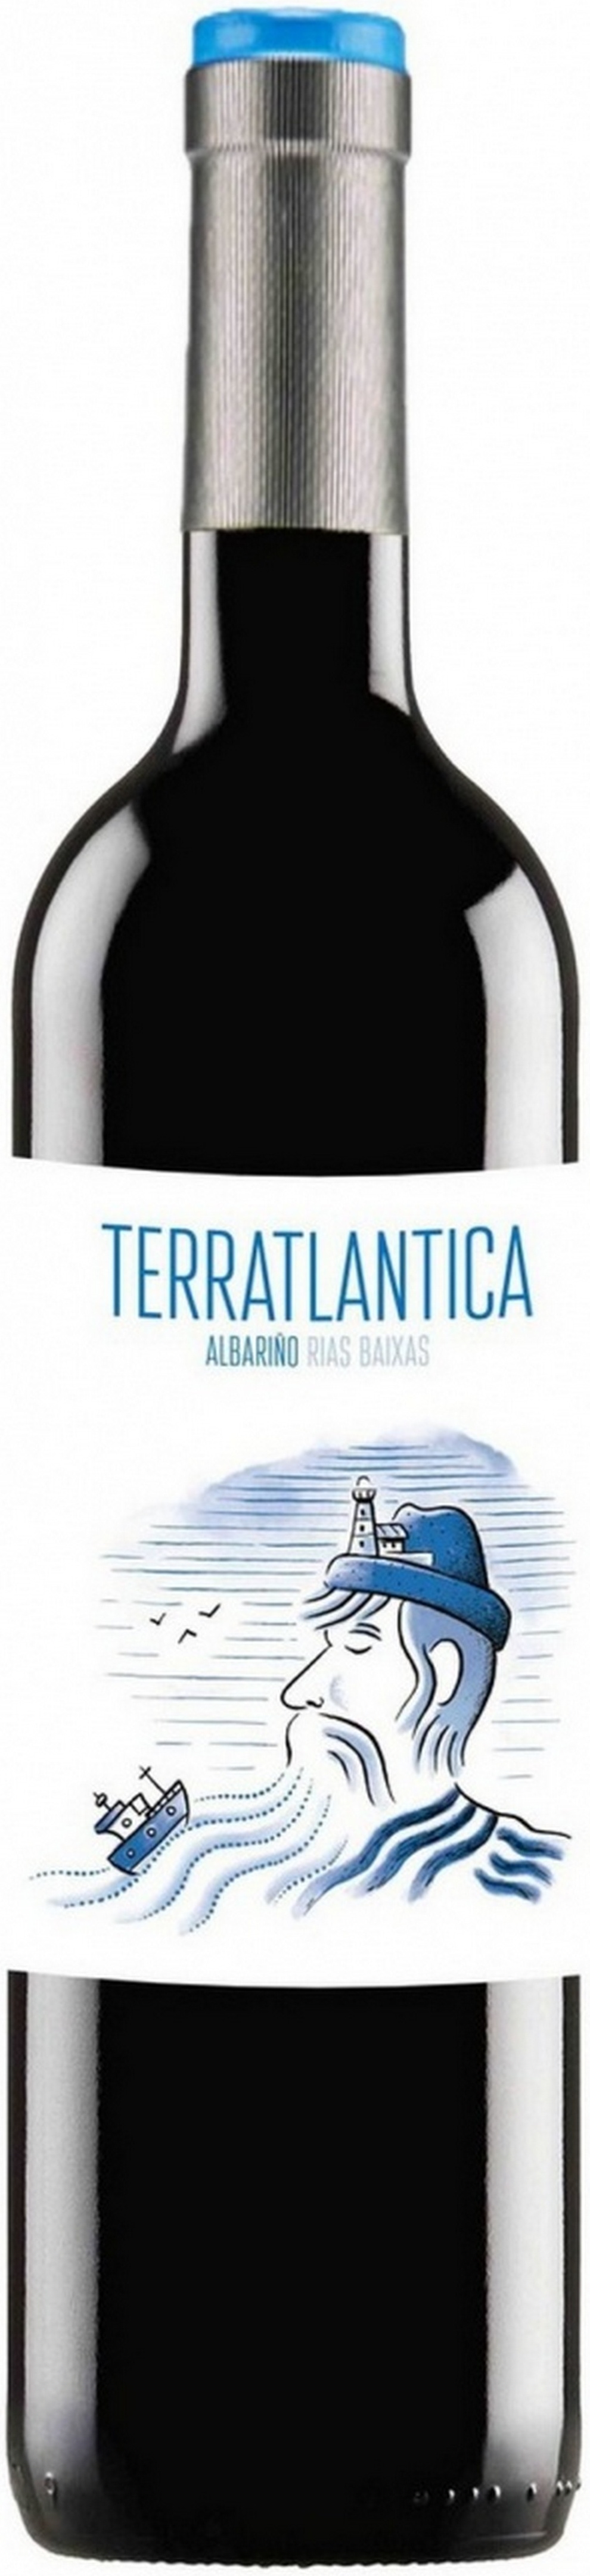 terratlantica-2018